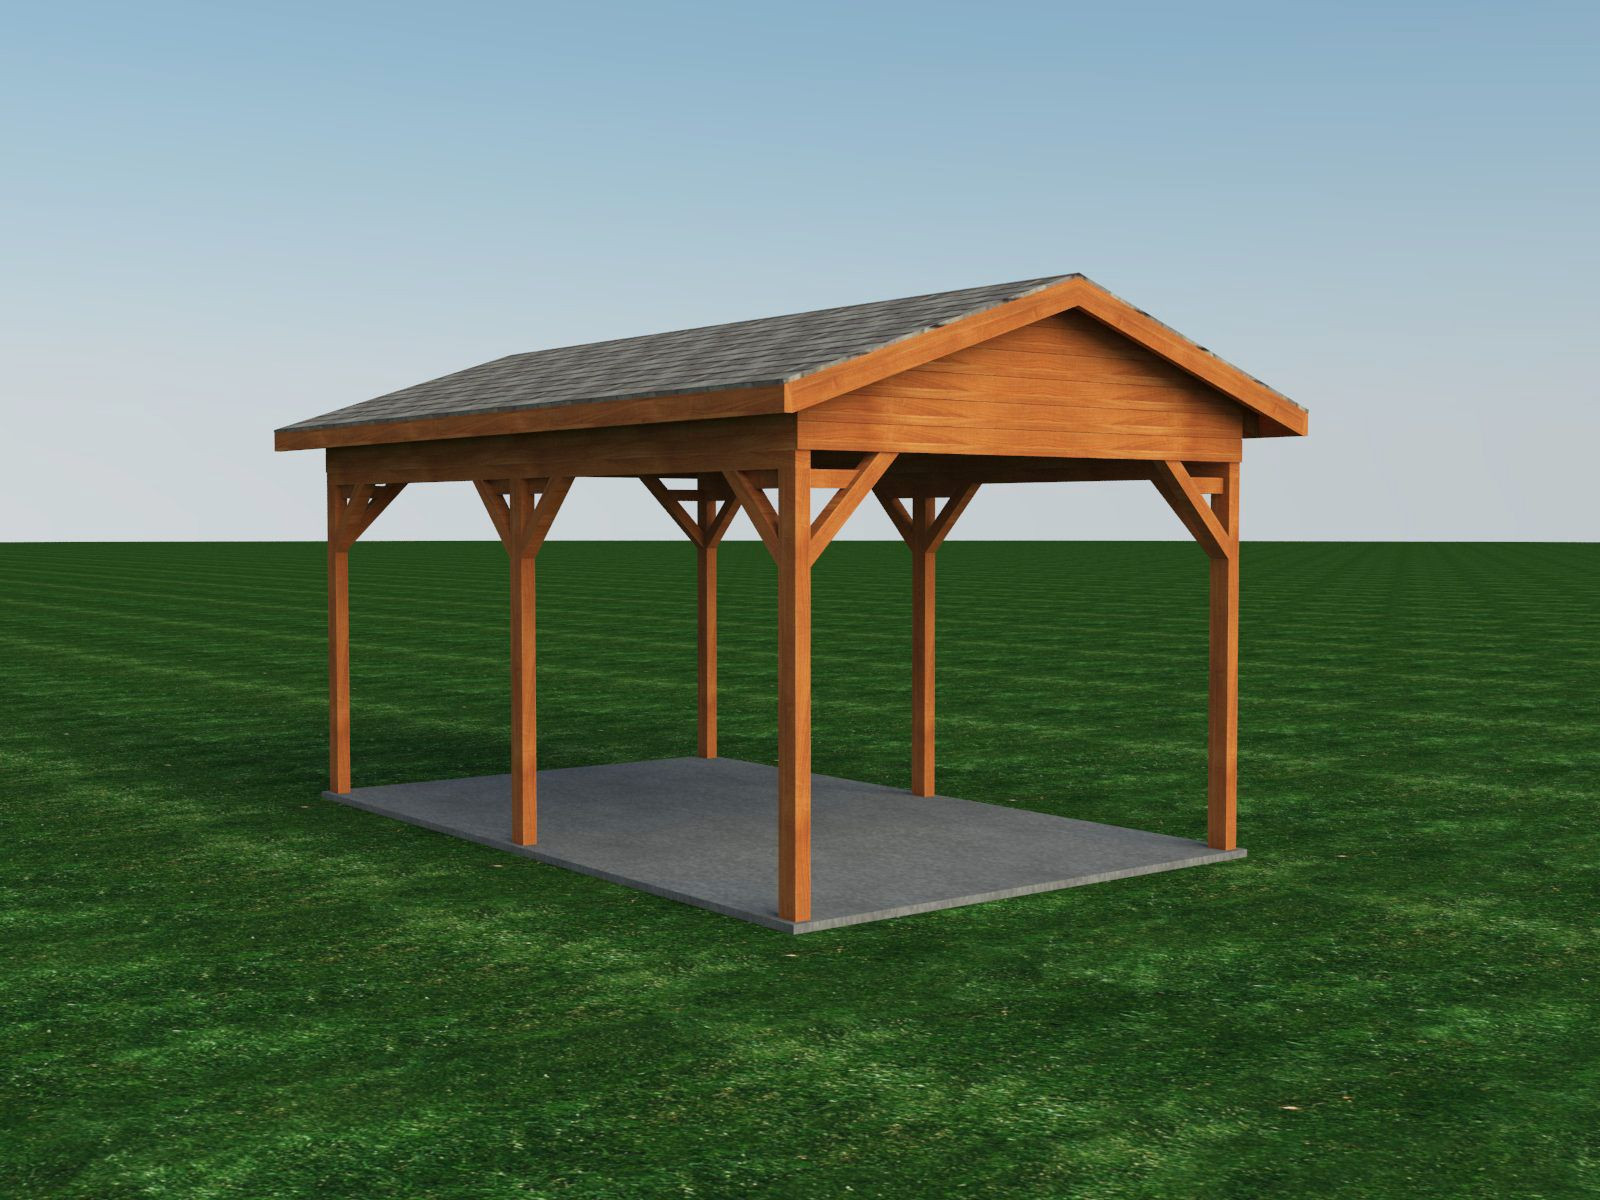 Best ideas about DIY Carport Plans
. Save or Pin Carport Plans DIY Outdoor Canopy Car Shelter Gazebo Garage Now.